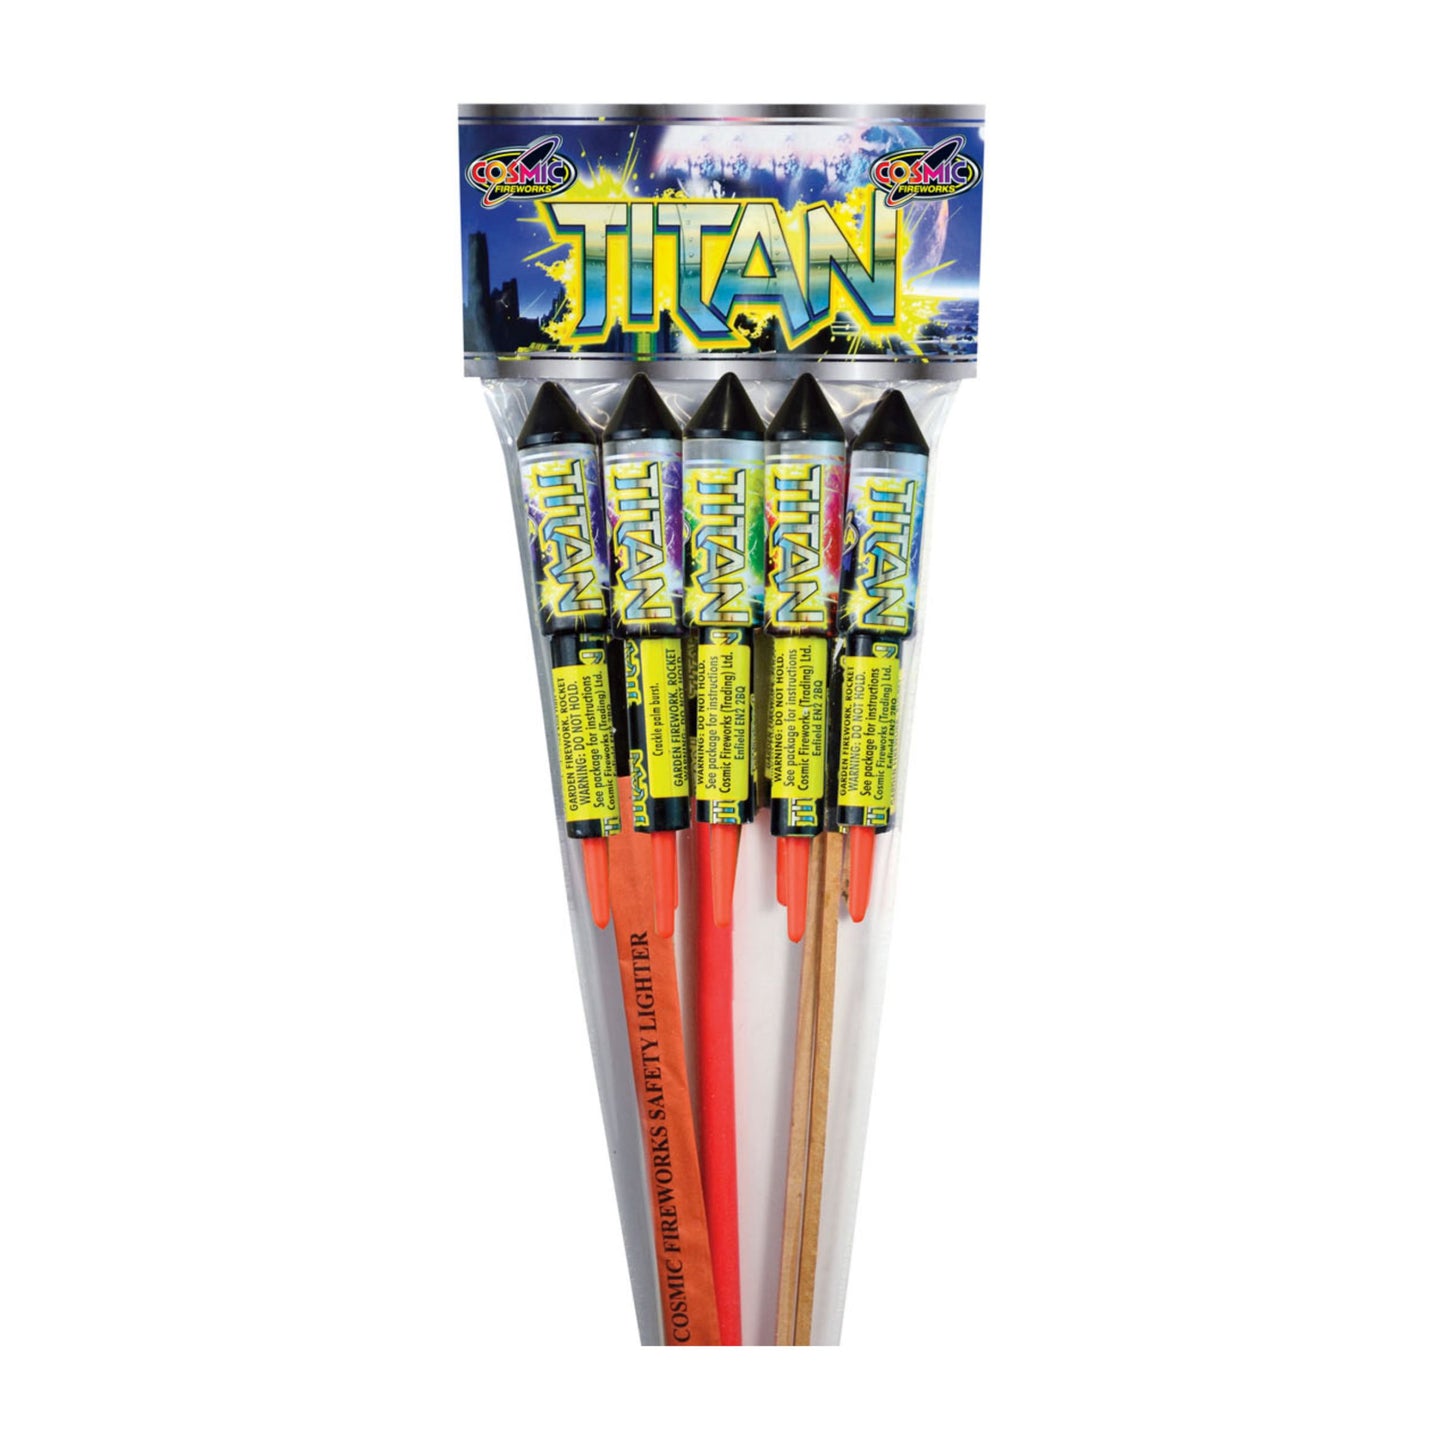 Titan Rockets